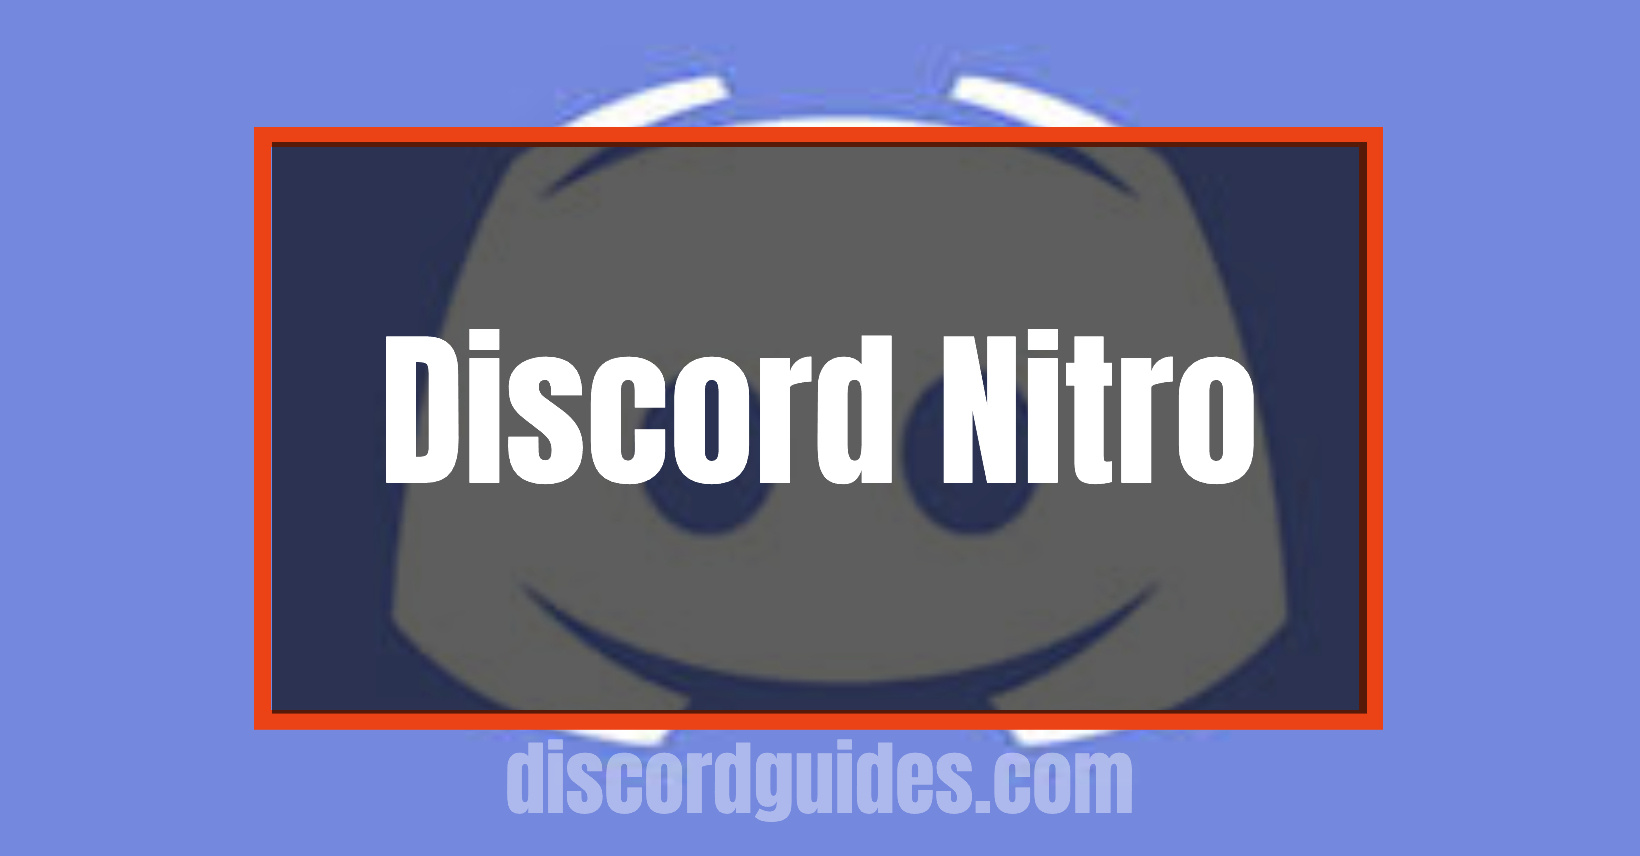 is discord nitro worth it